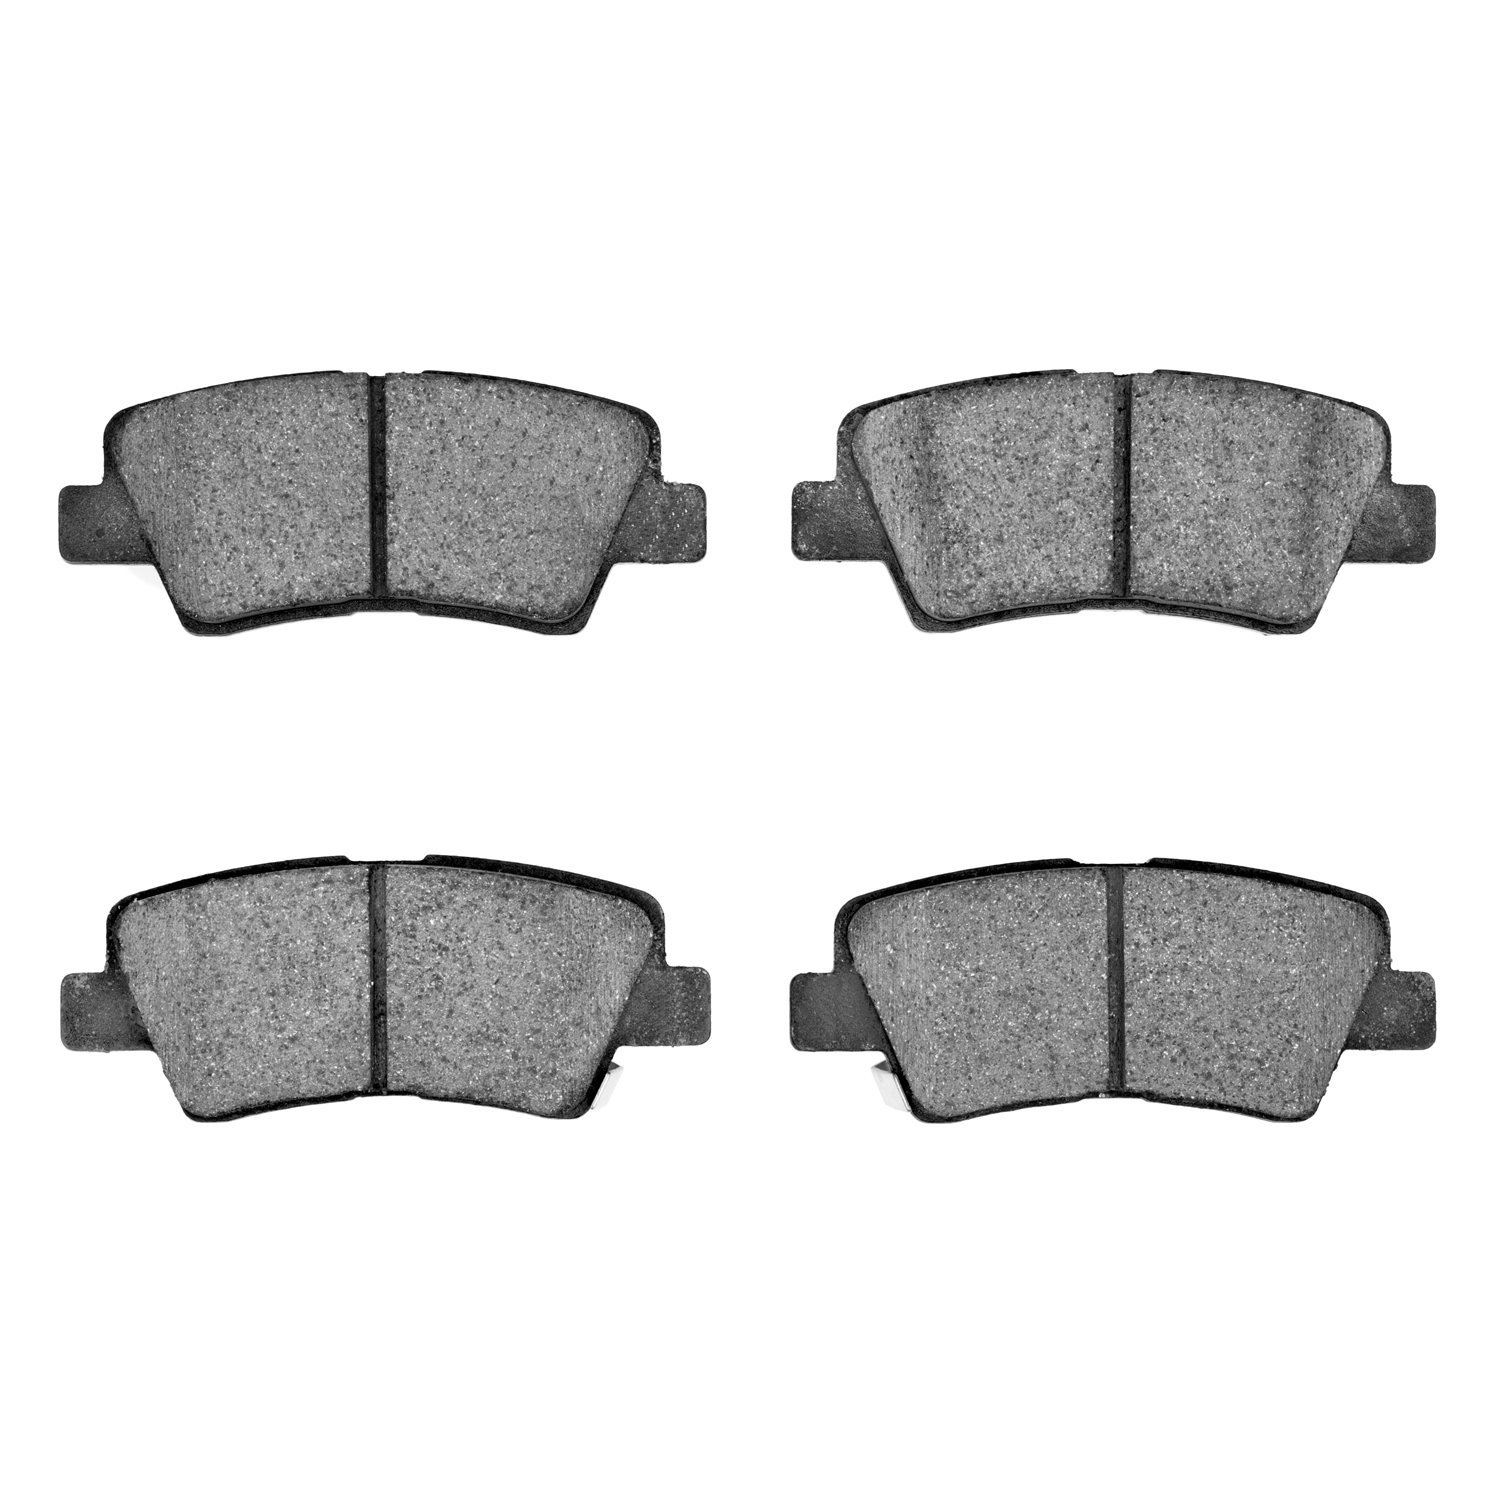 1311-1812-00 3000-Series Semi-Metallic Brake Pads, Fits Select Multiple Makes/Models, Position: Rear